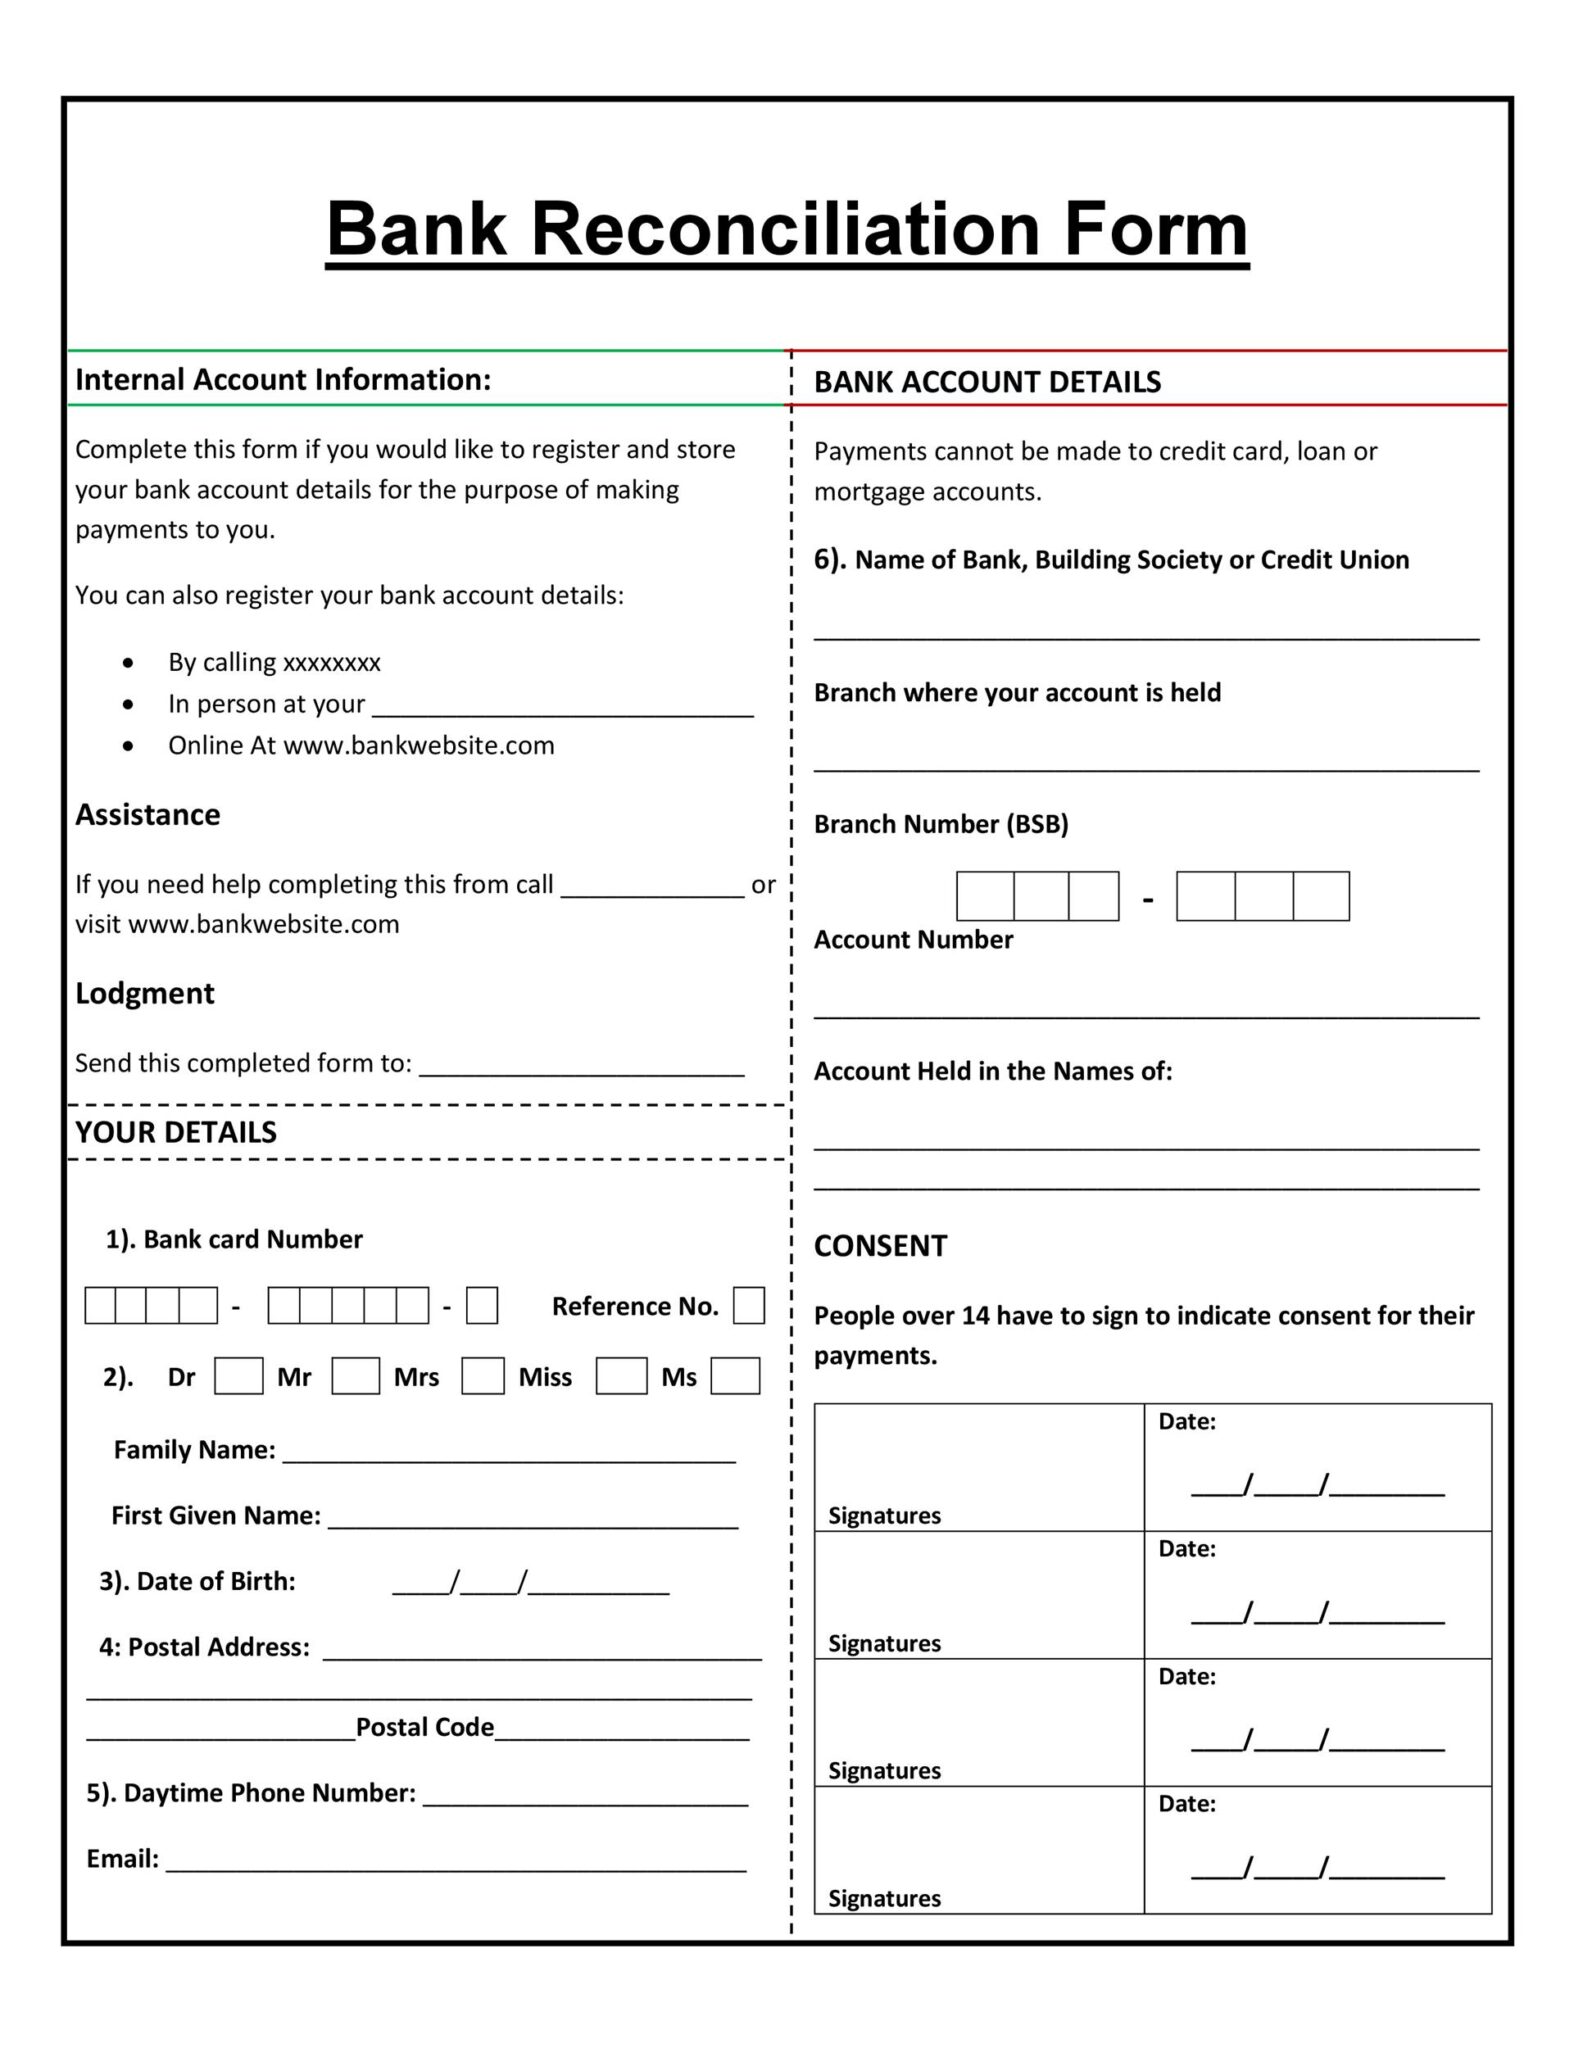 55-useful-bank-reconciliation-template-redlinesp